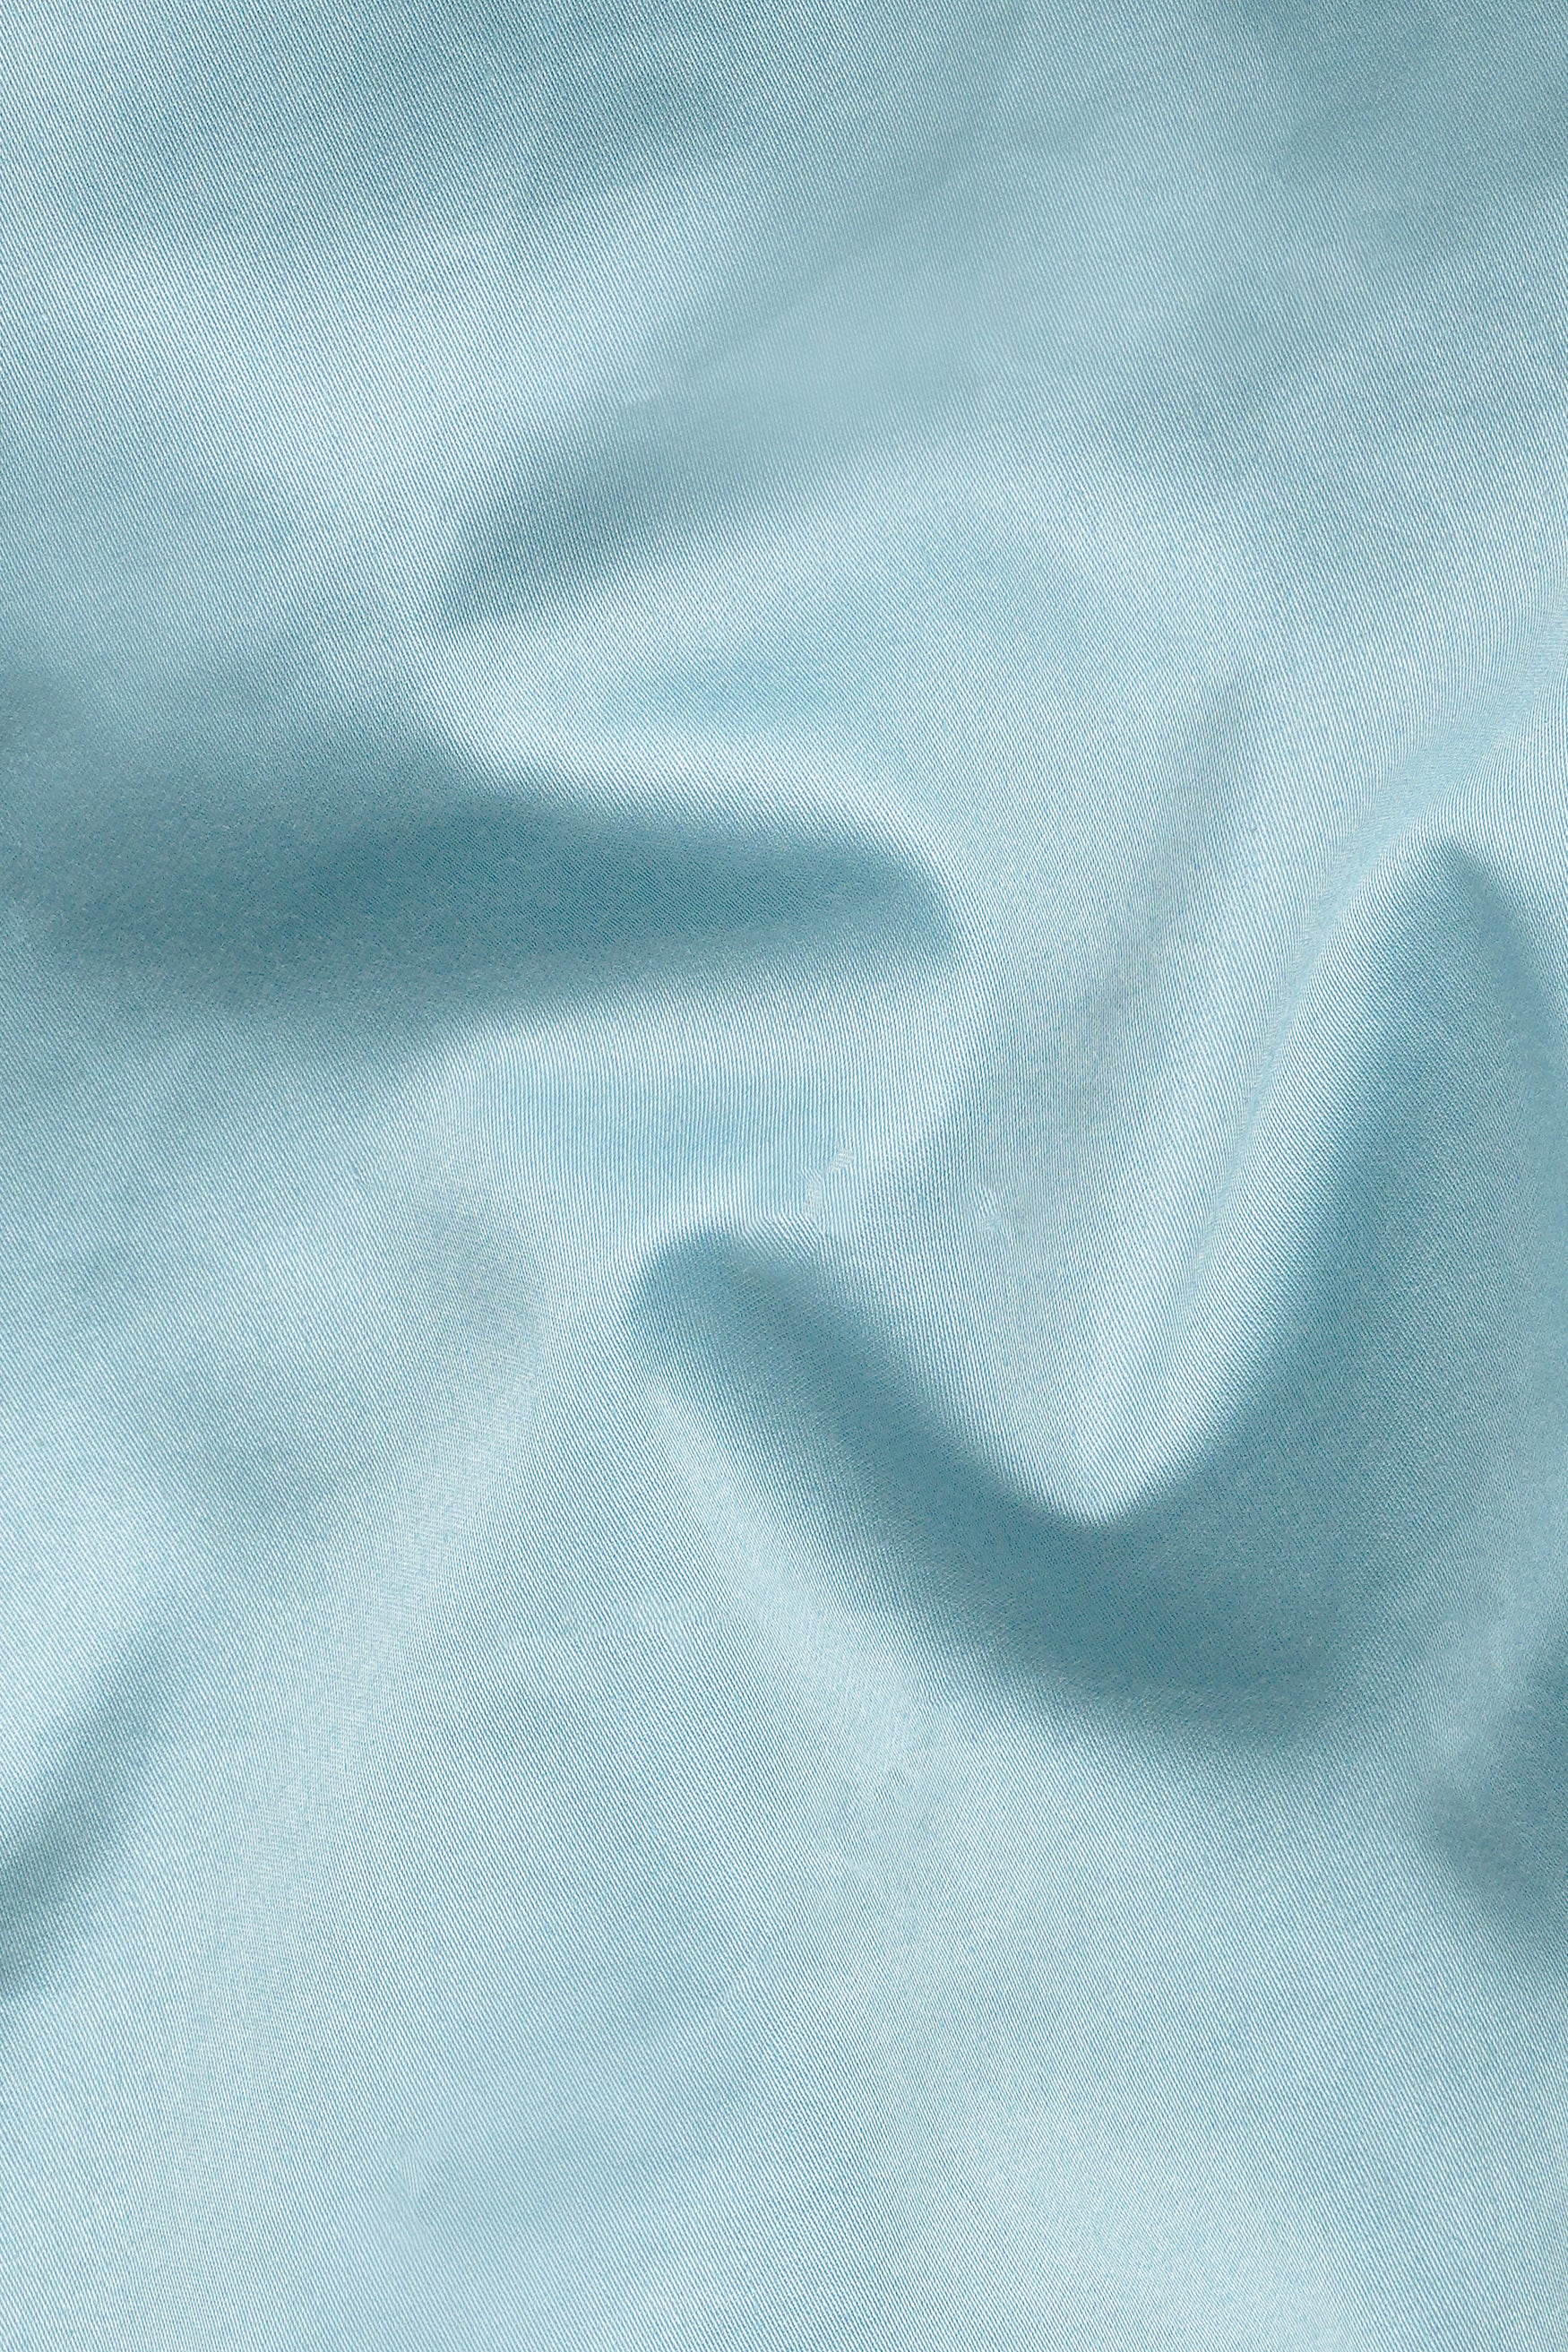 Ziggurat Blue Subtle Sheen Super Soft Premium Cotton Shorts SR306-28,  SR306-30,  SR306-32,  SR306-34,  SR306-36,  SR306-38,  SR306-40,  SR306-42,  SR306-44